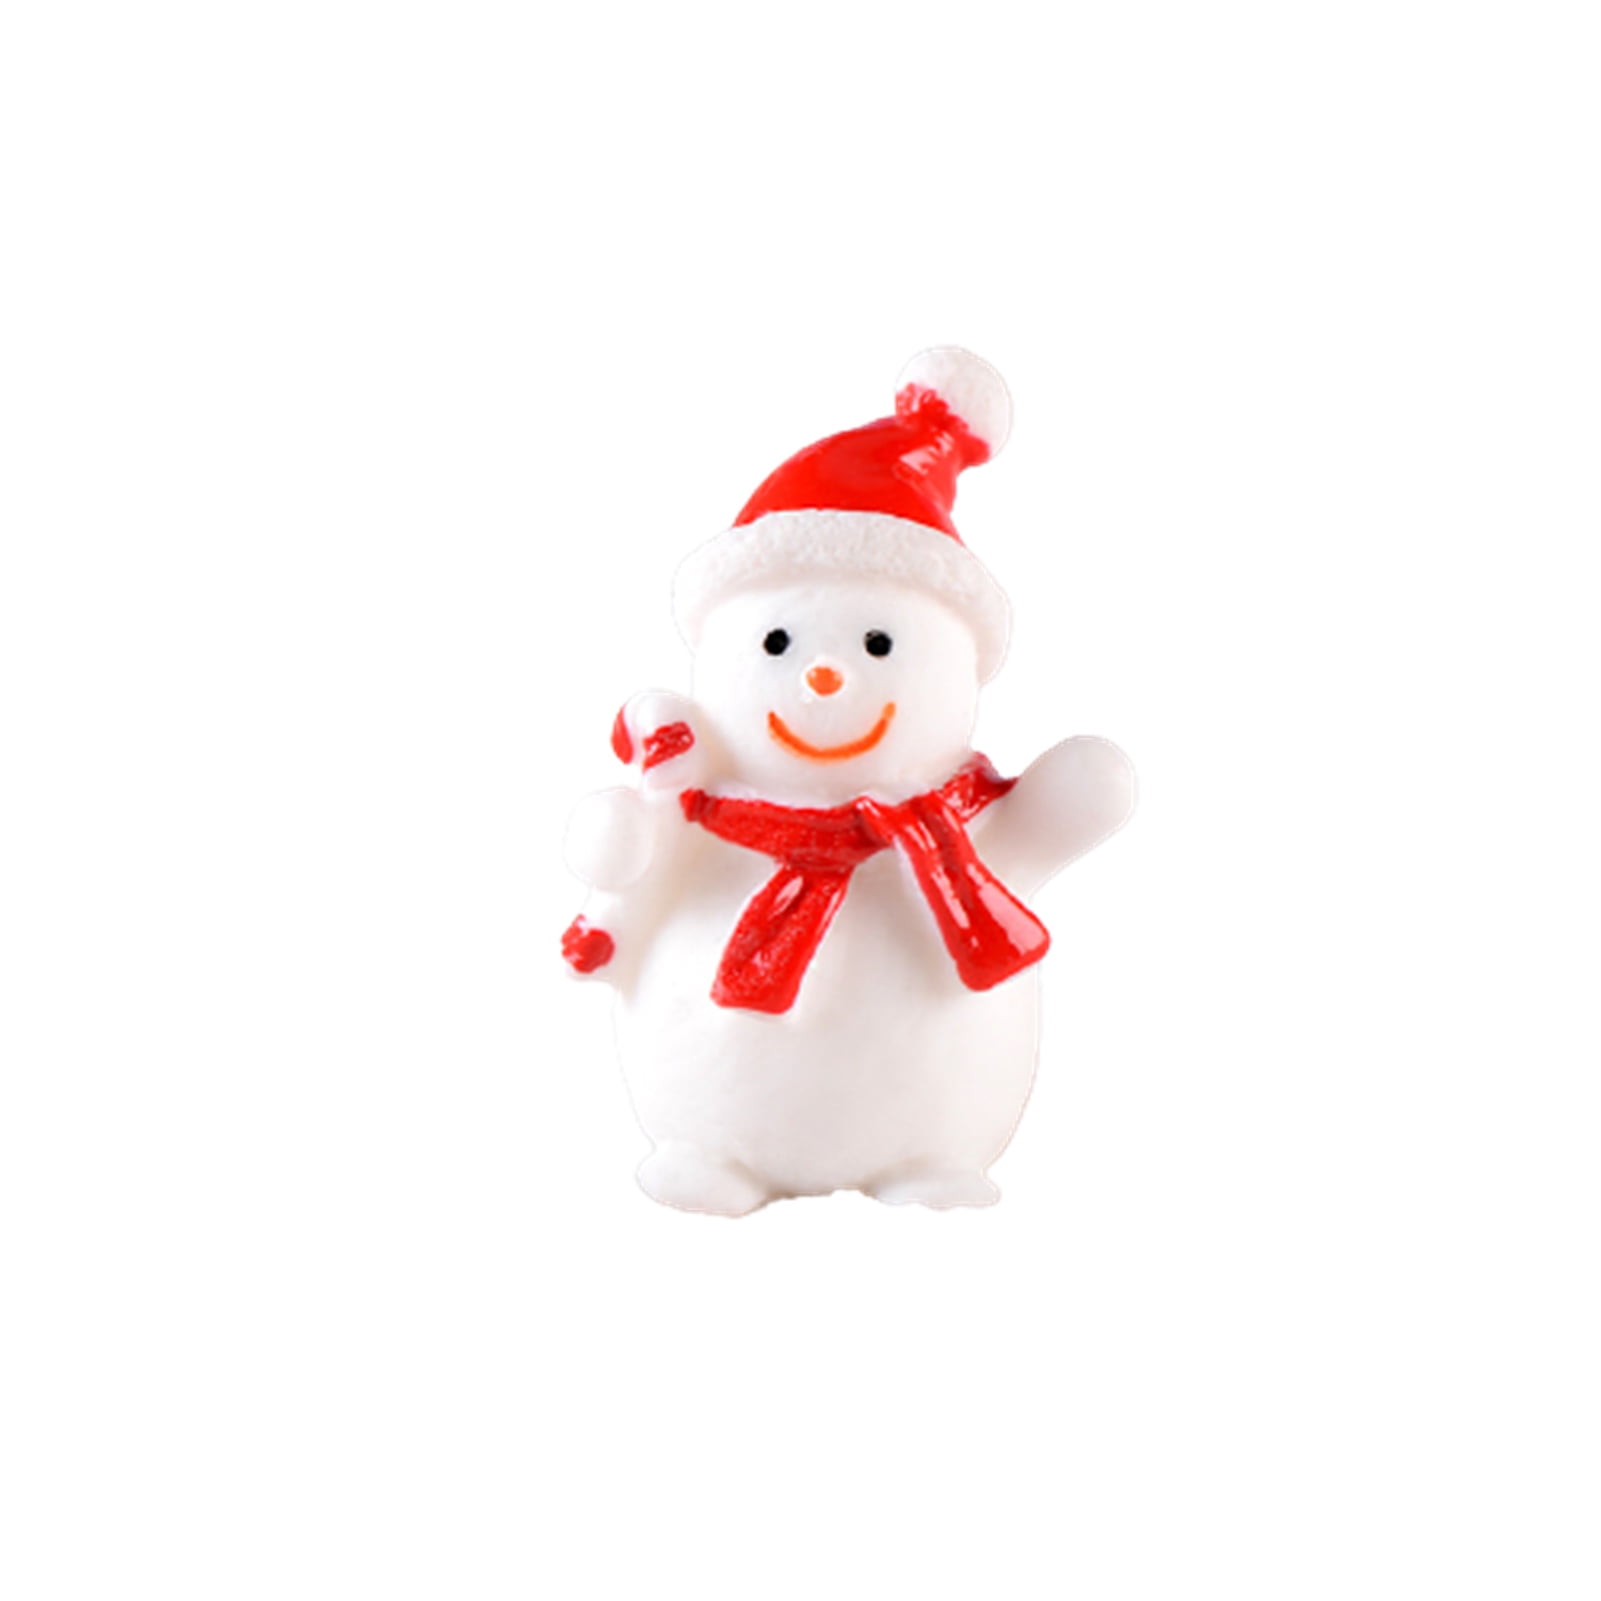 Garden Santa Claus Figurines Micro Landscape Miniature Snowman Christmas Decor 